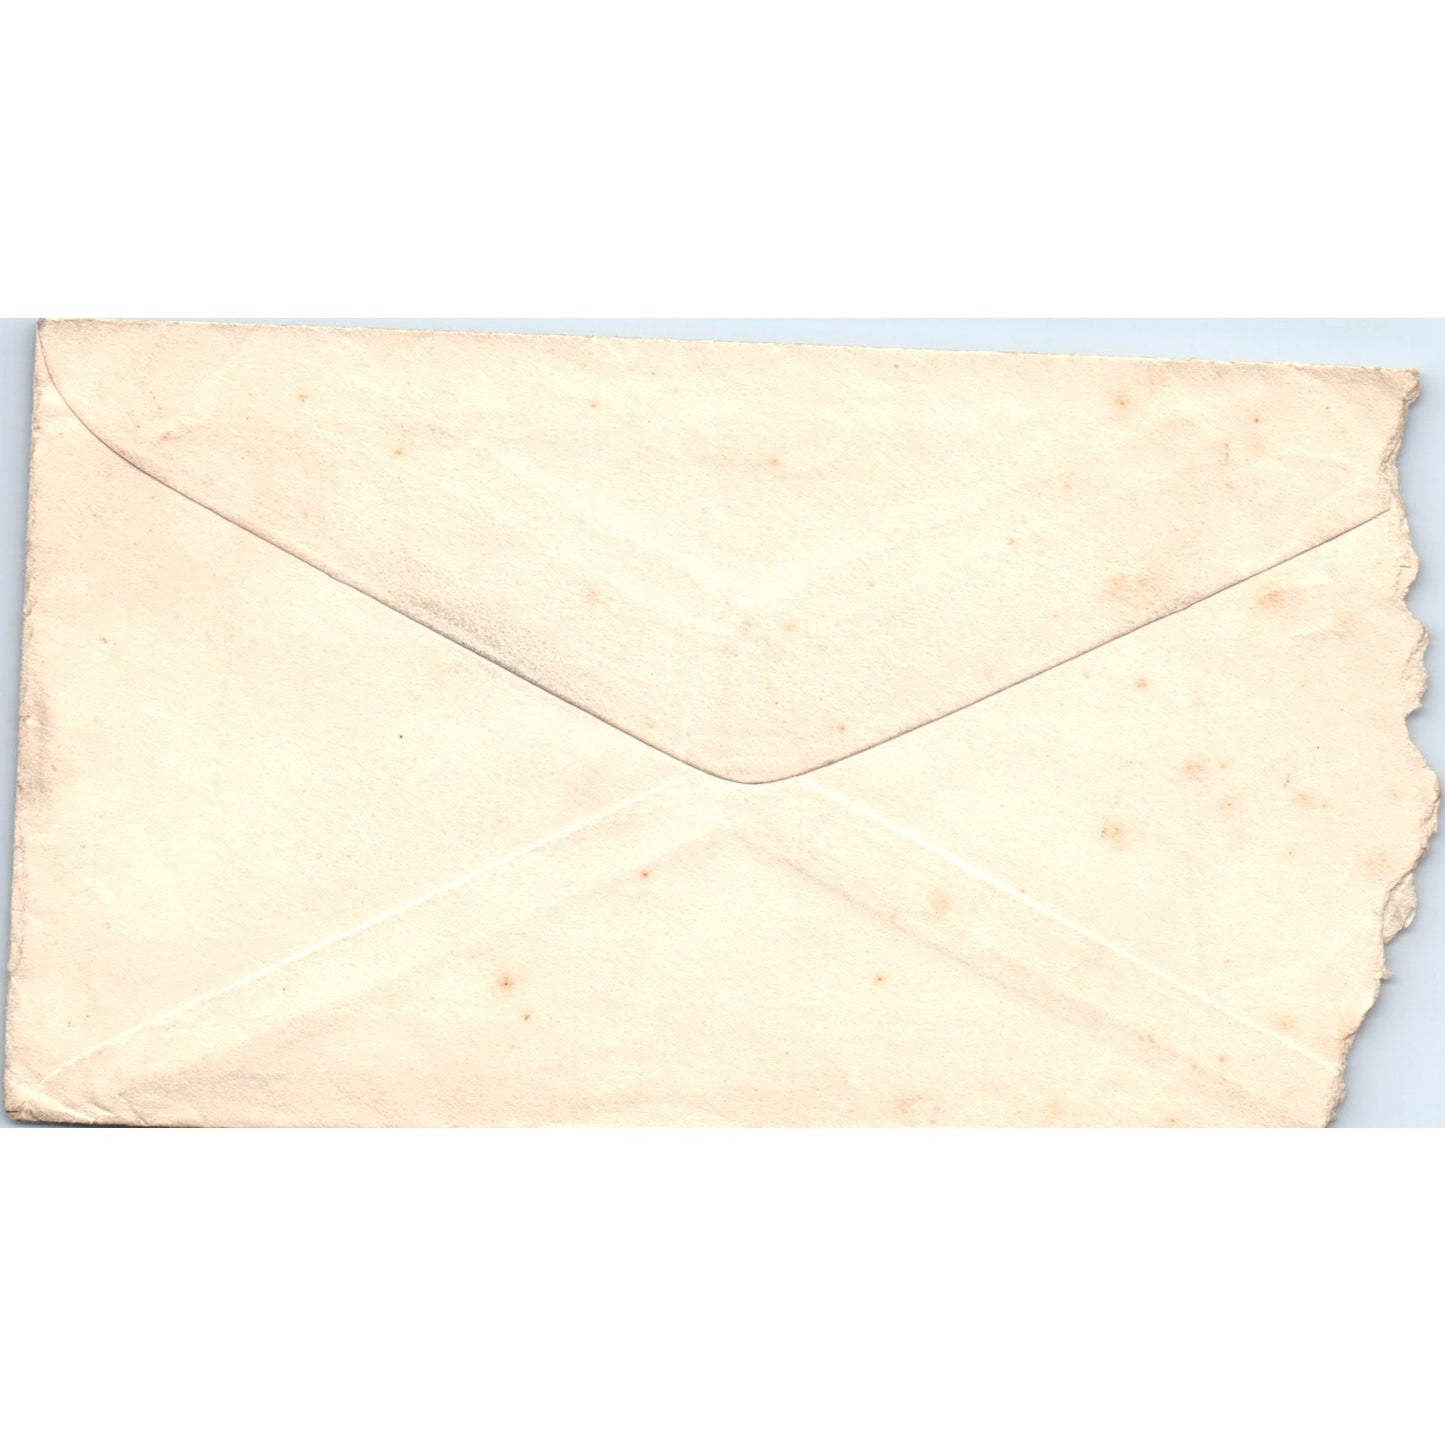 1916 West Stockbridge Marble Works Co Lee MA Postal Cover Envelope TG7-PC2